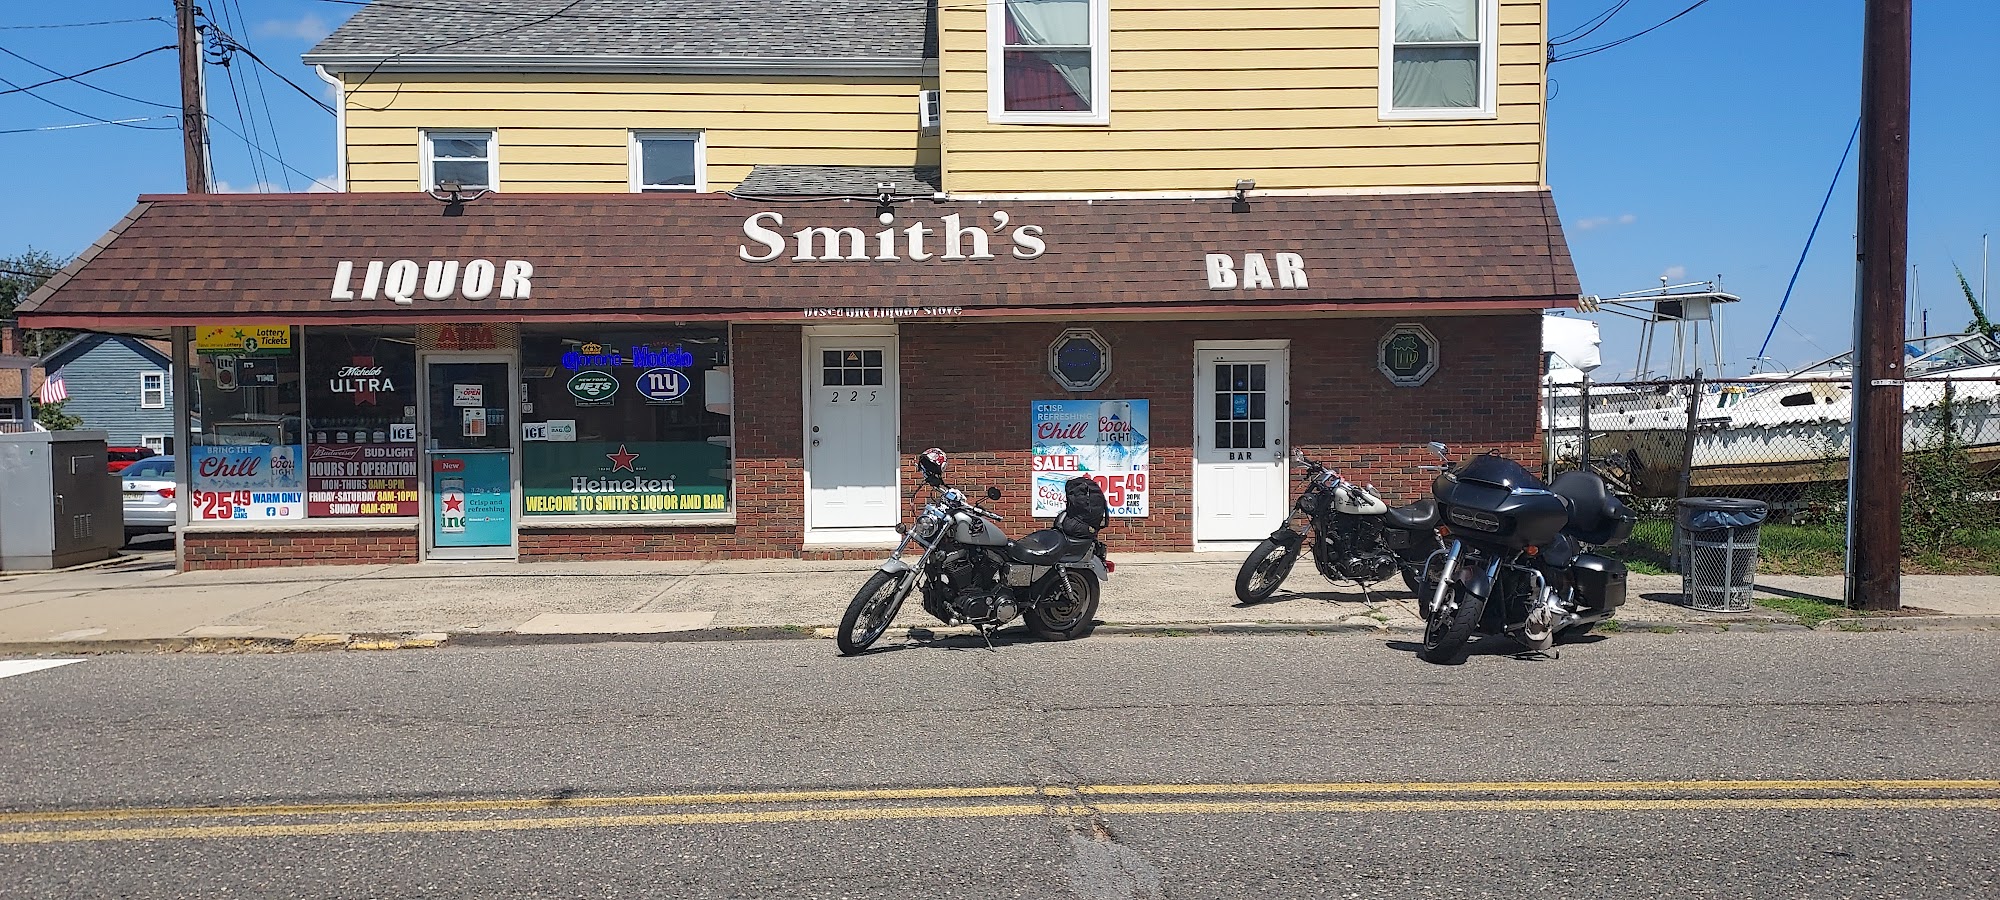 Smith's Liquor Shop & Bar